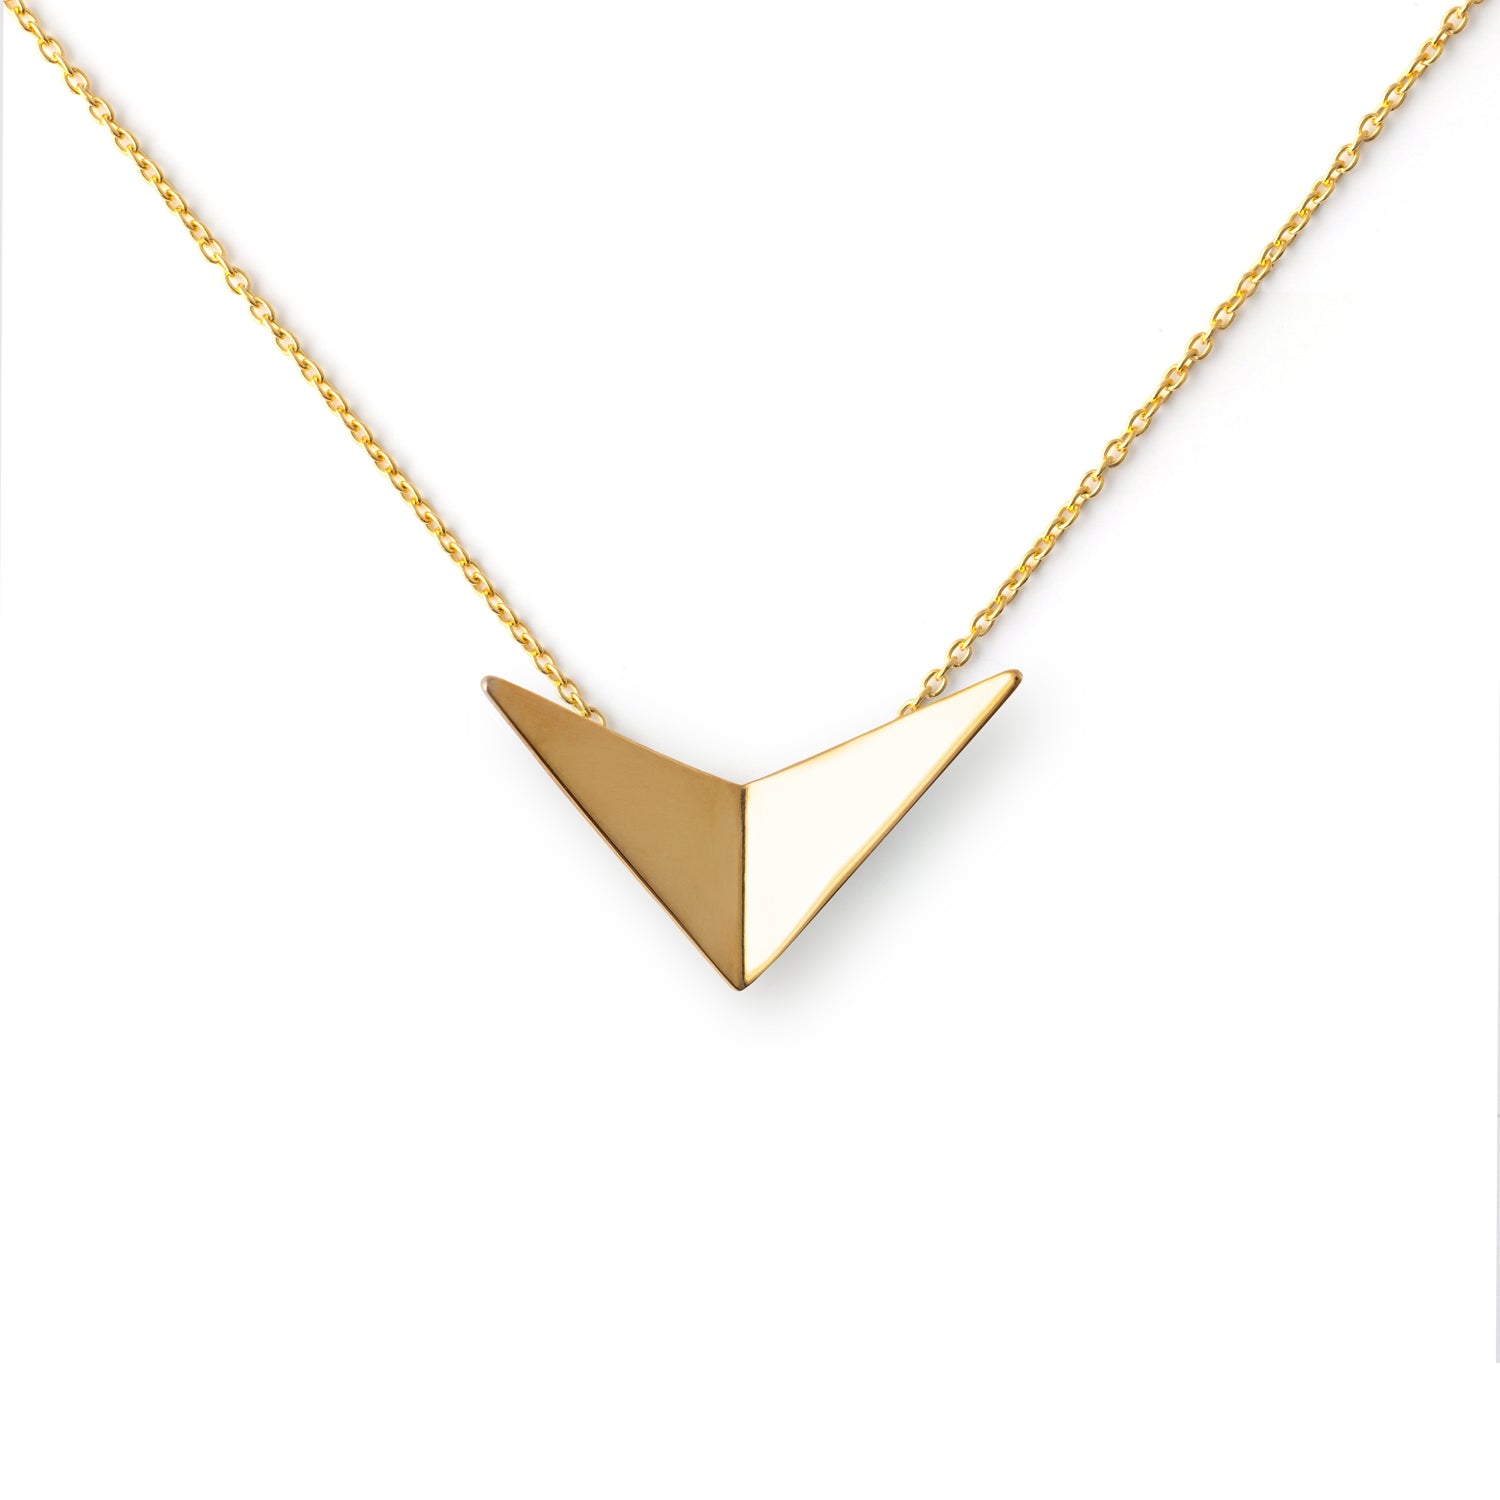 Large gold bird necklace